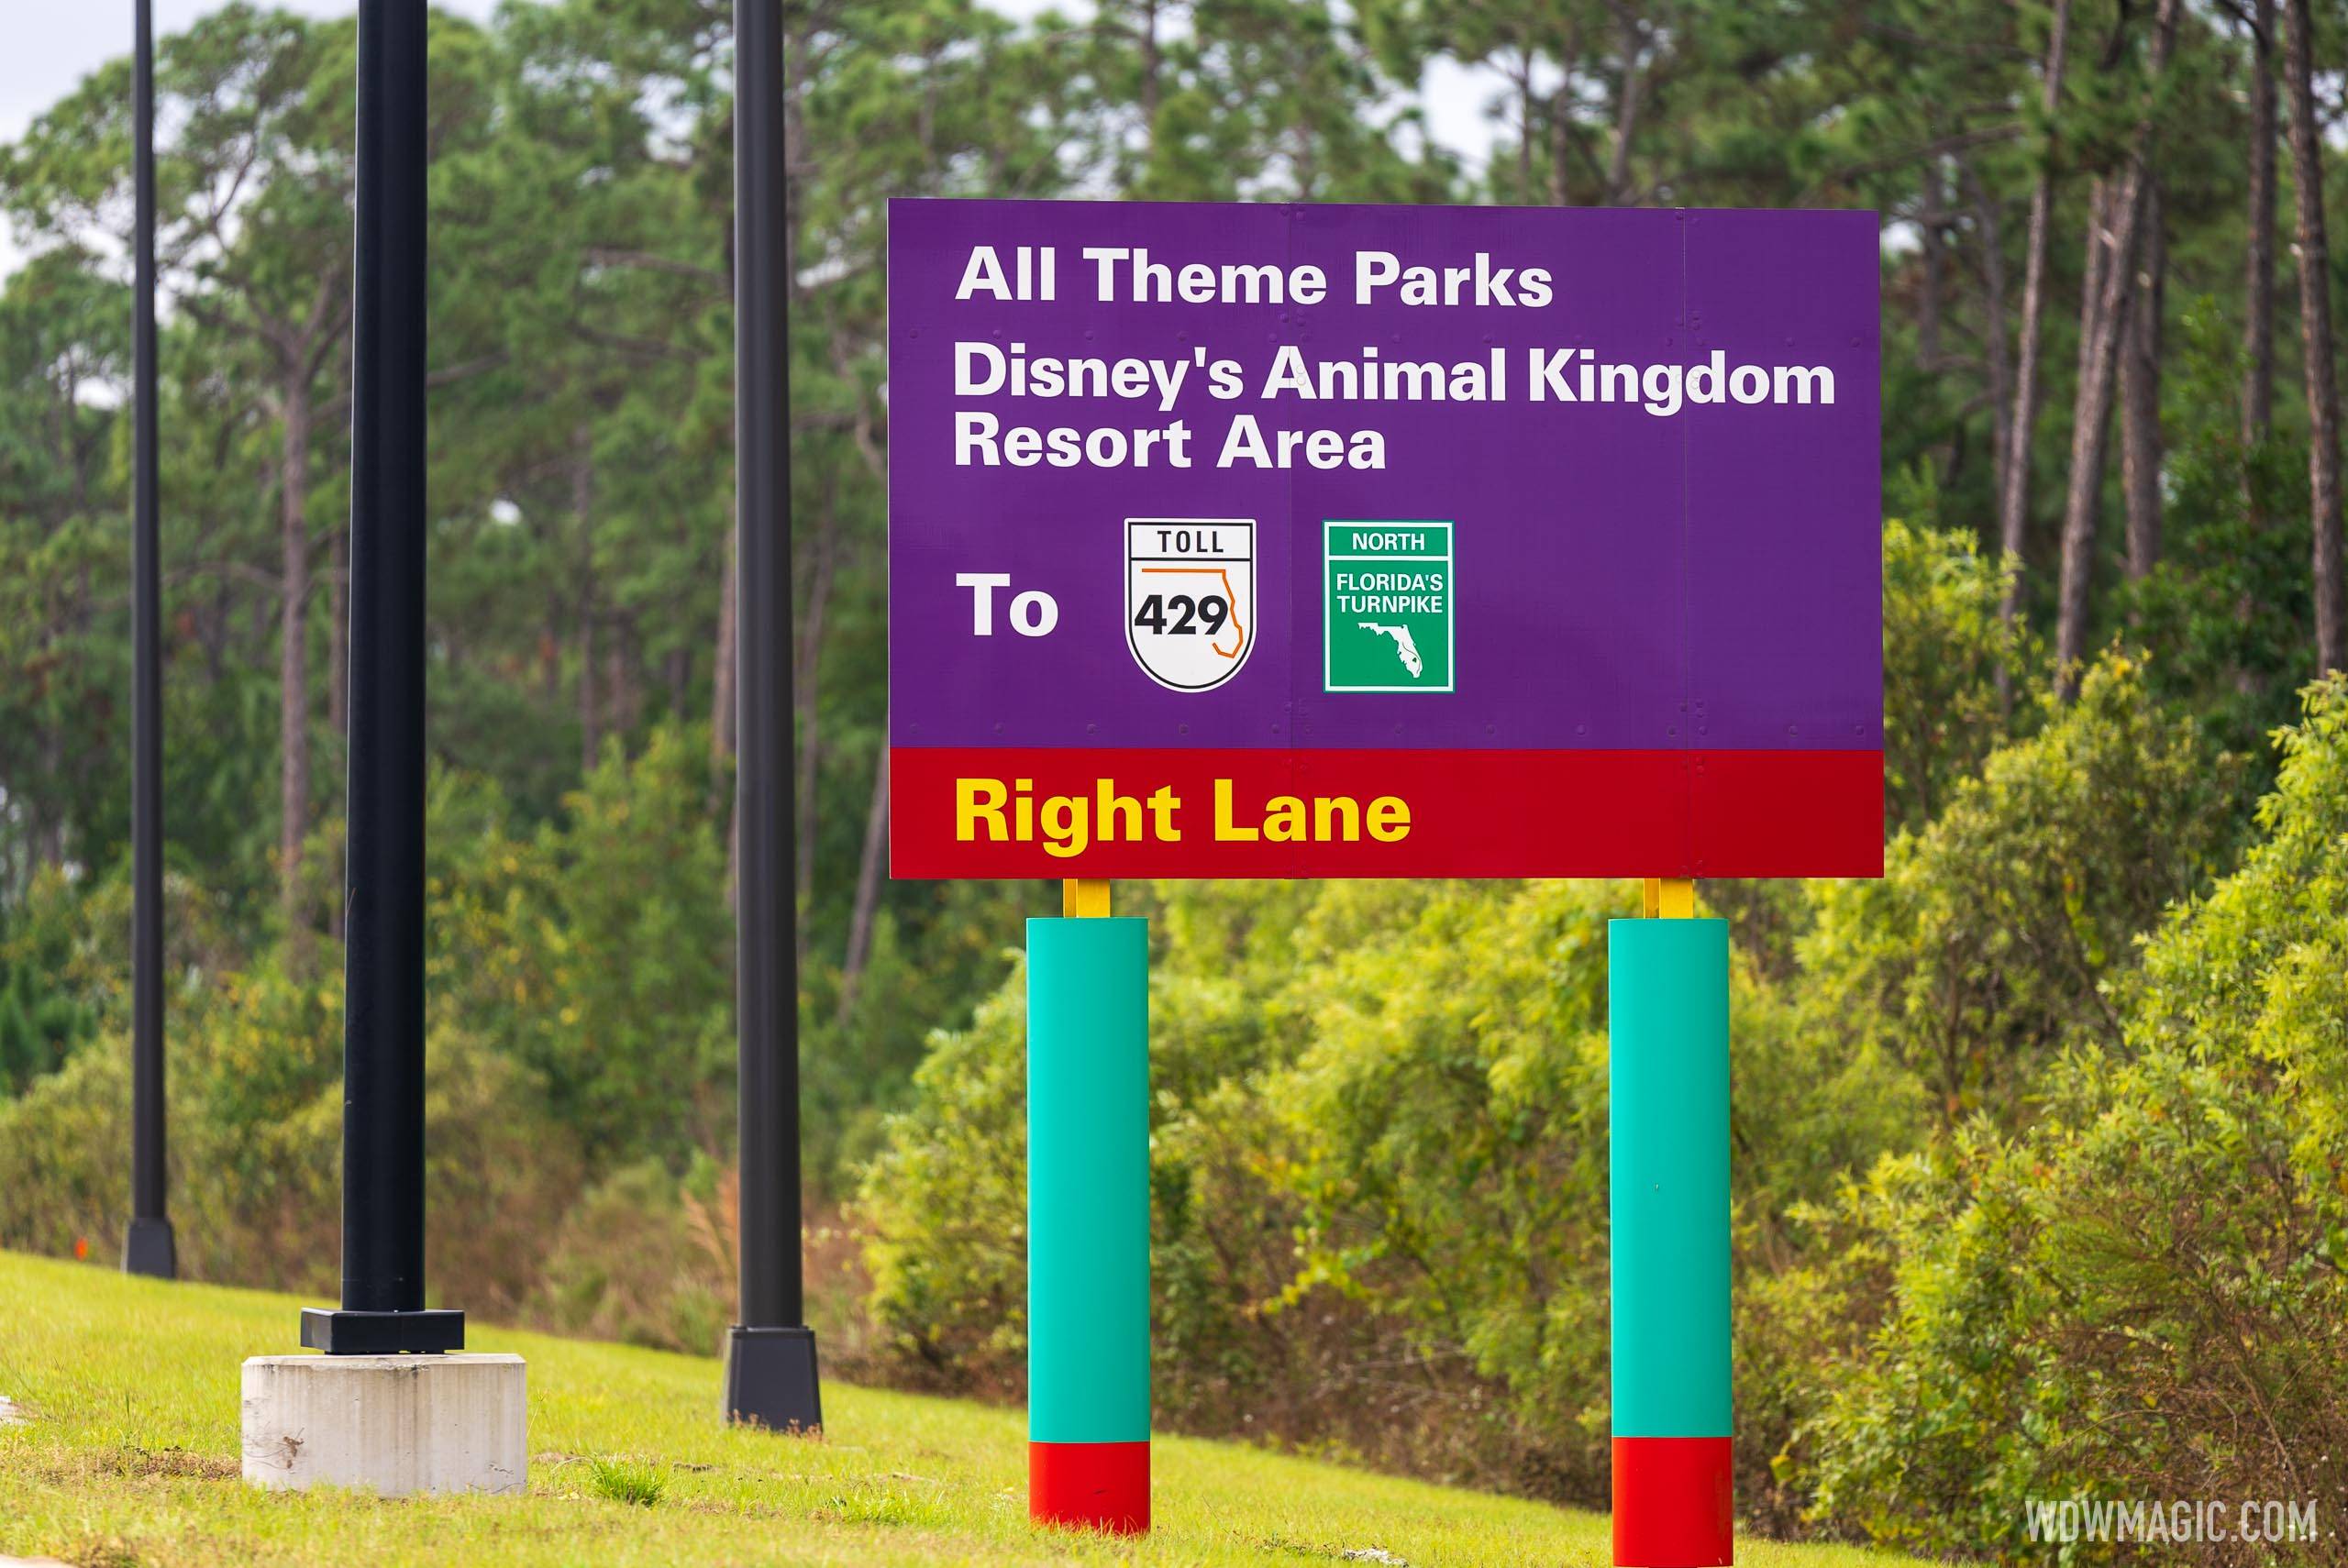 The original purple Walt Disney World road signs